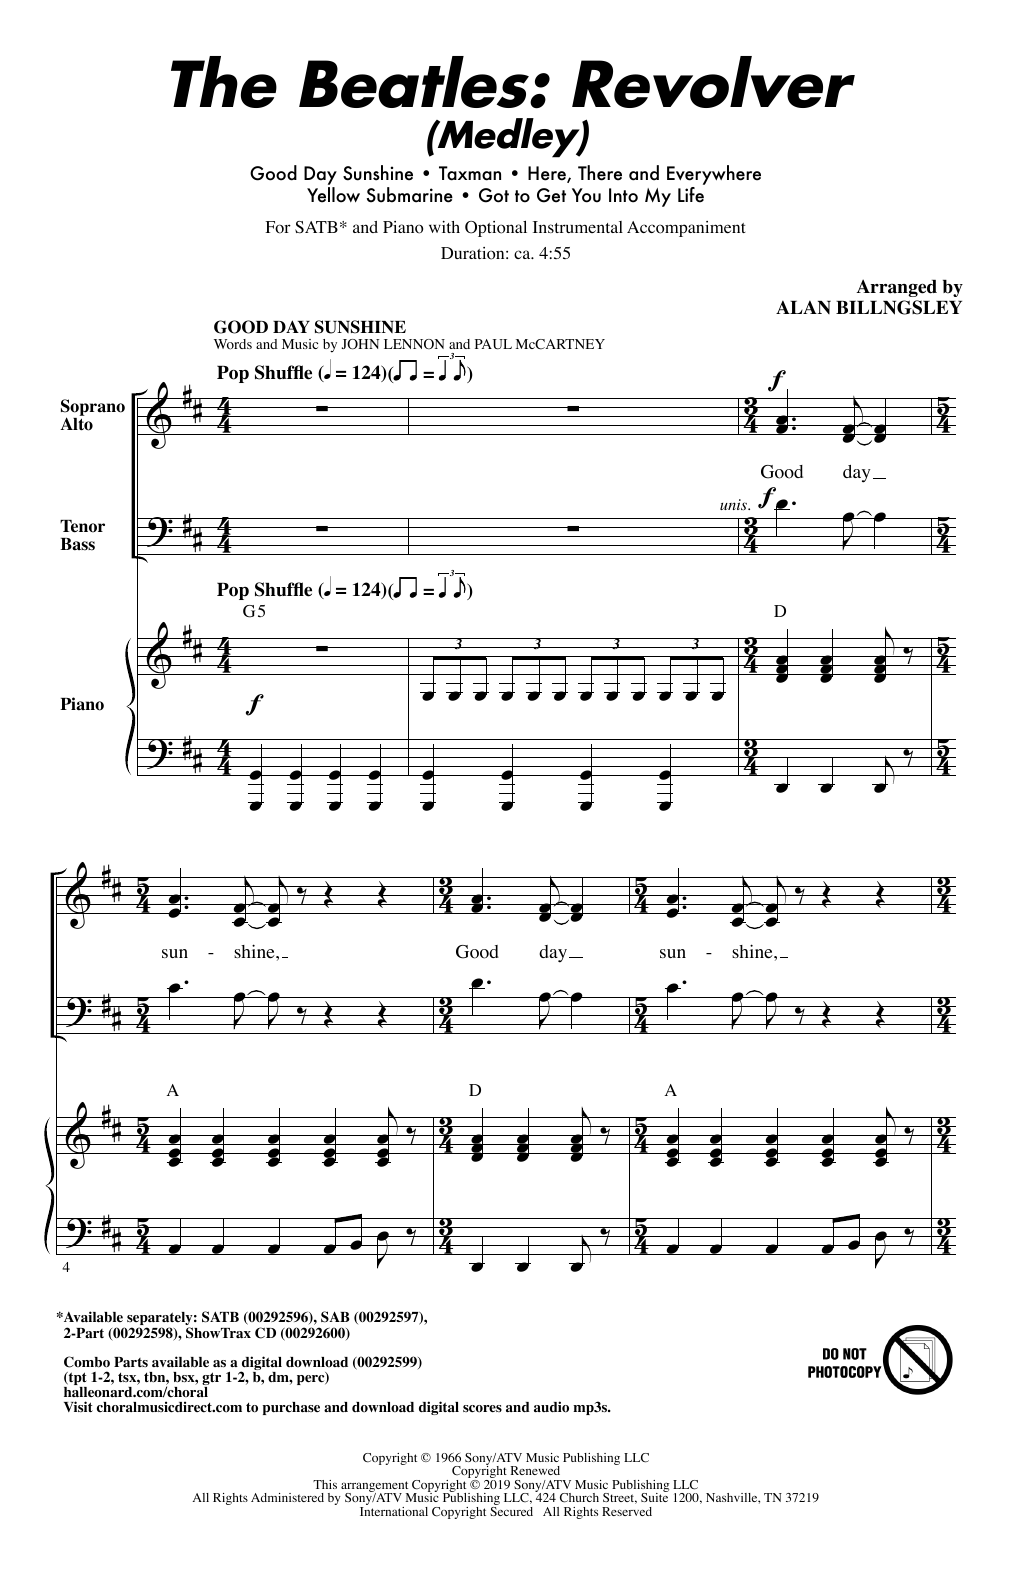 The Beatles The Beatles: Revolver (Medley) (arr. Alan Billingsley) Sheet Music Notes & Chords for 2-Part Choir - Download or Print PDF